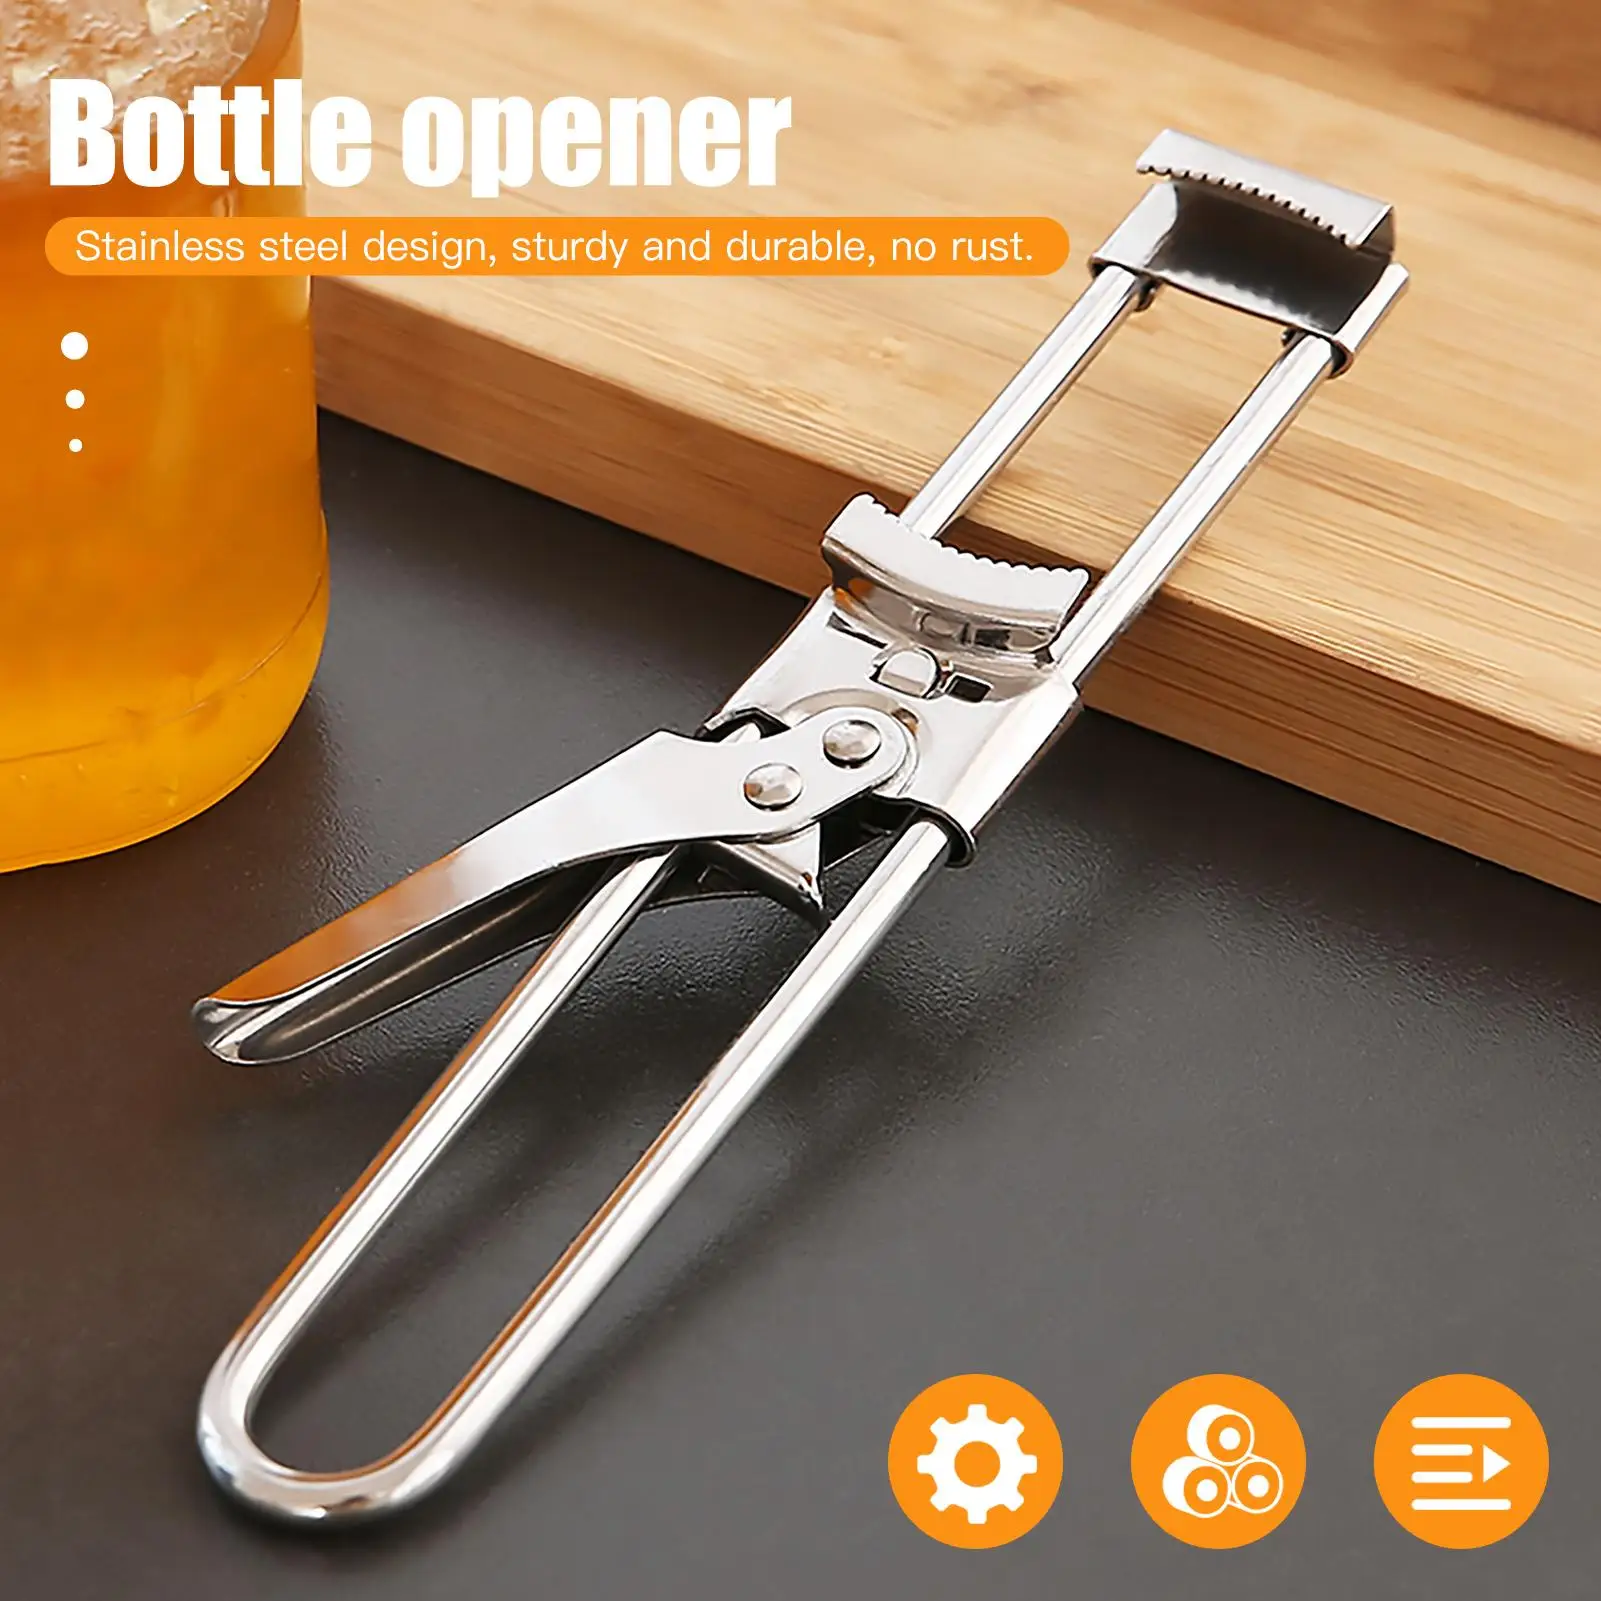 https://ae01.alicdn.com/kf/S453c4fcc730b4d42ab98c509465ec1af5/Can-Opener-Multifunction-Stainless-Steel-Bottle-Opener-Portable-Can-Opener-Jam-Open-Bottle-Adjustable-Manual-Opener.jpg